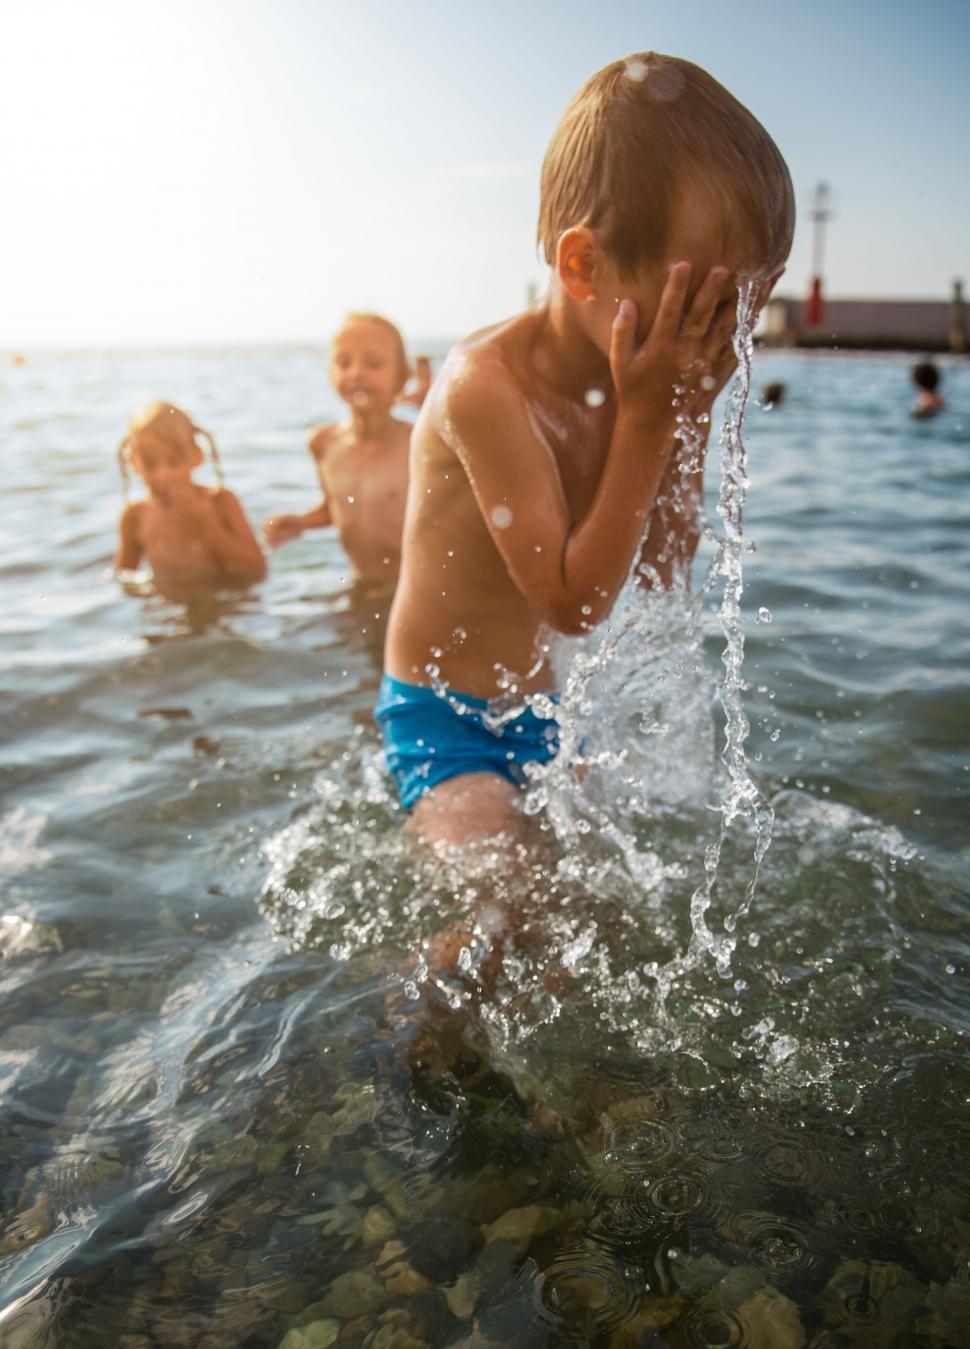 Free Image of Child splashing water in the sea 